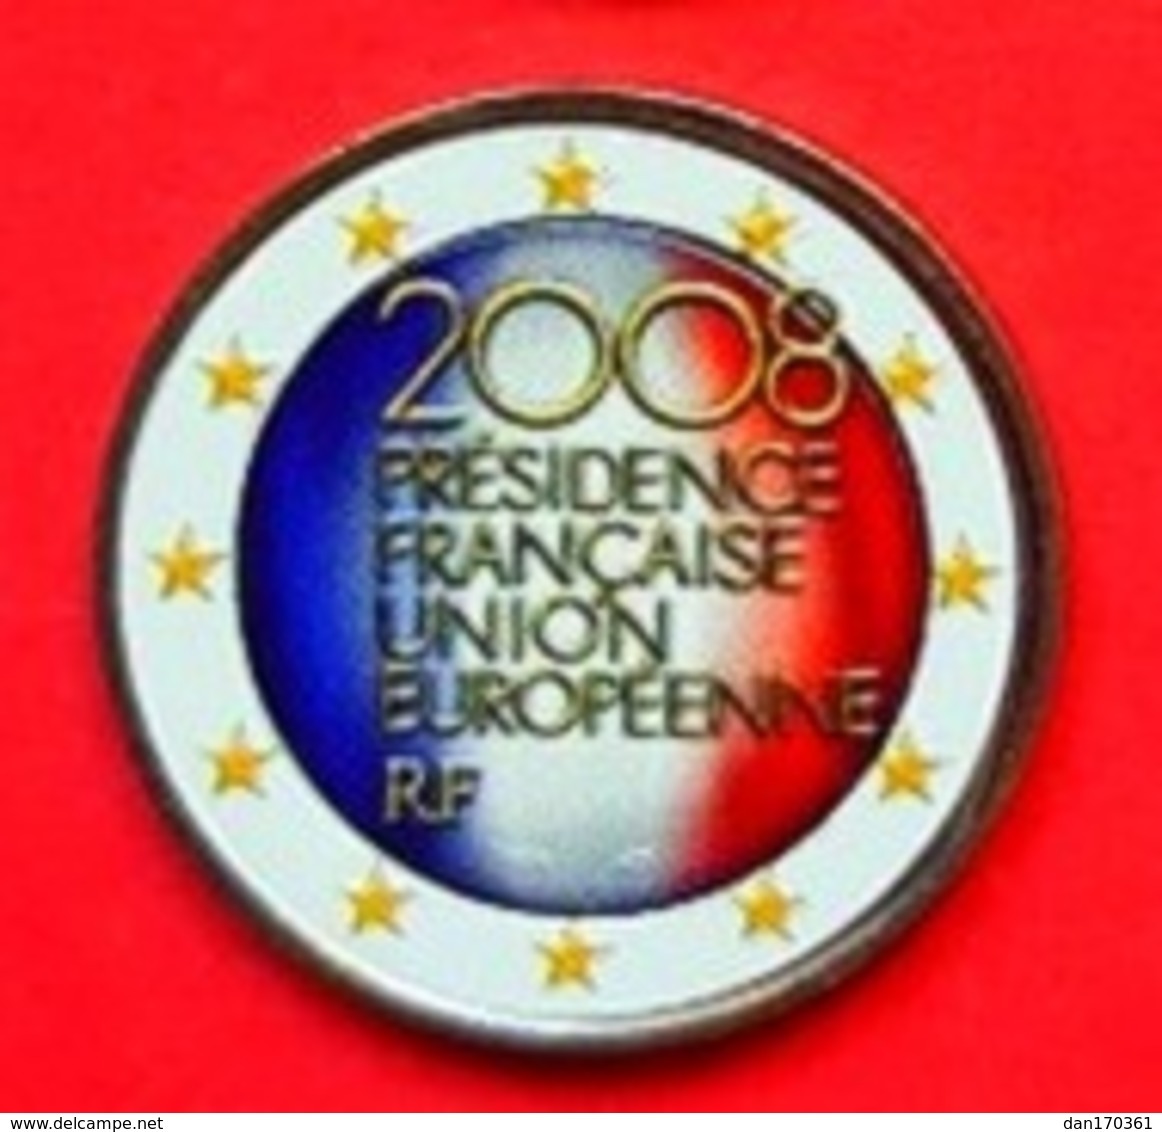 FRANCE 2008 - PRESIDENCE EUROPEENNE   - 2 EUROS COMMEMORATIVE COULEUR AVEC LE TOUR BLANC - FARBE - COLORED - COLOR - France